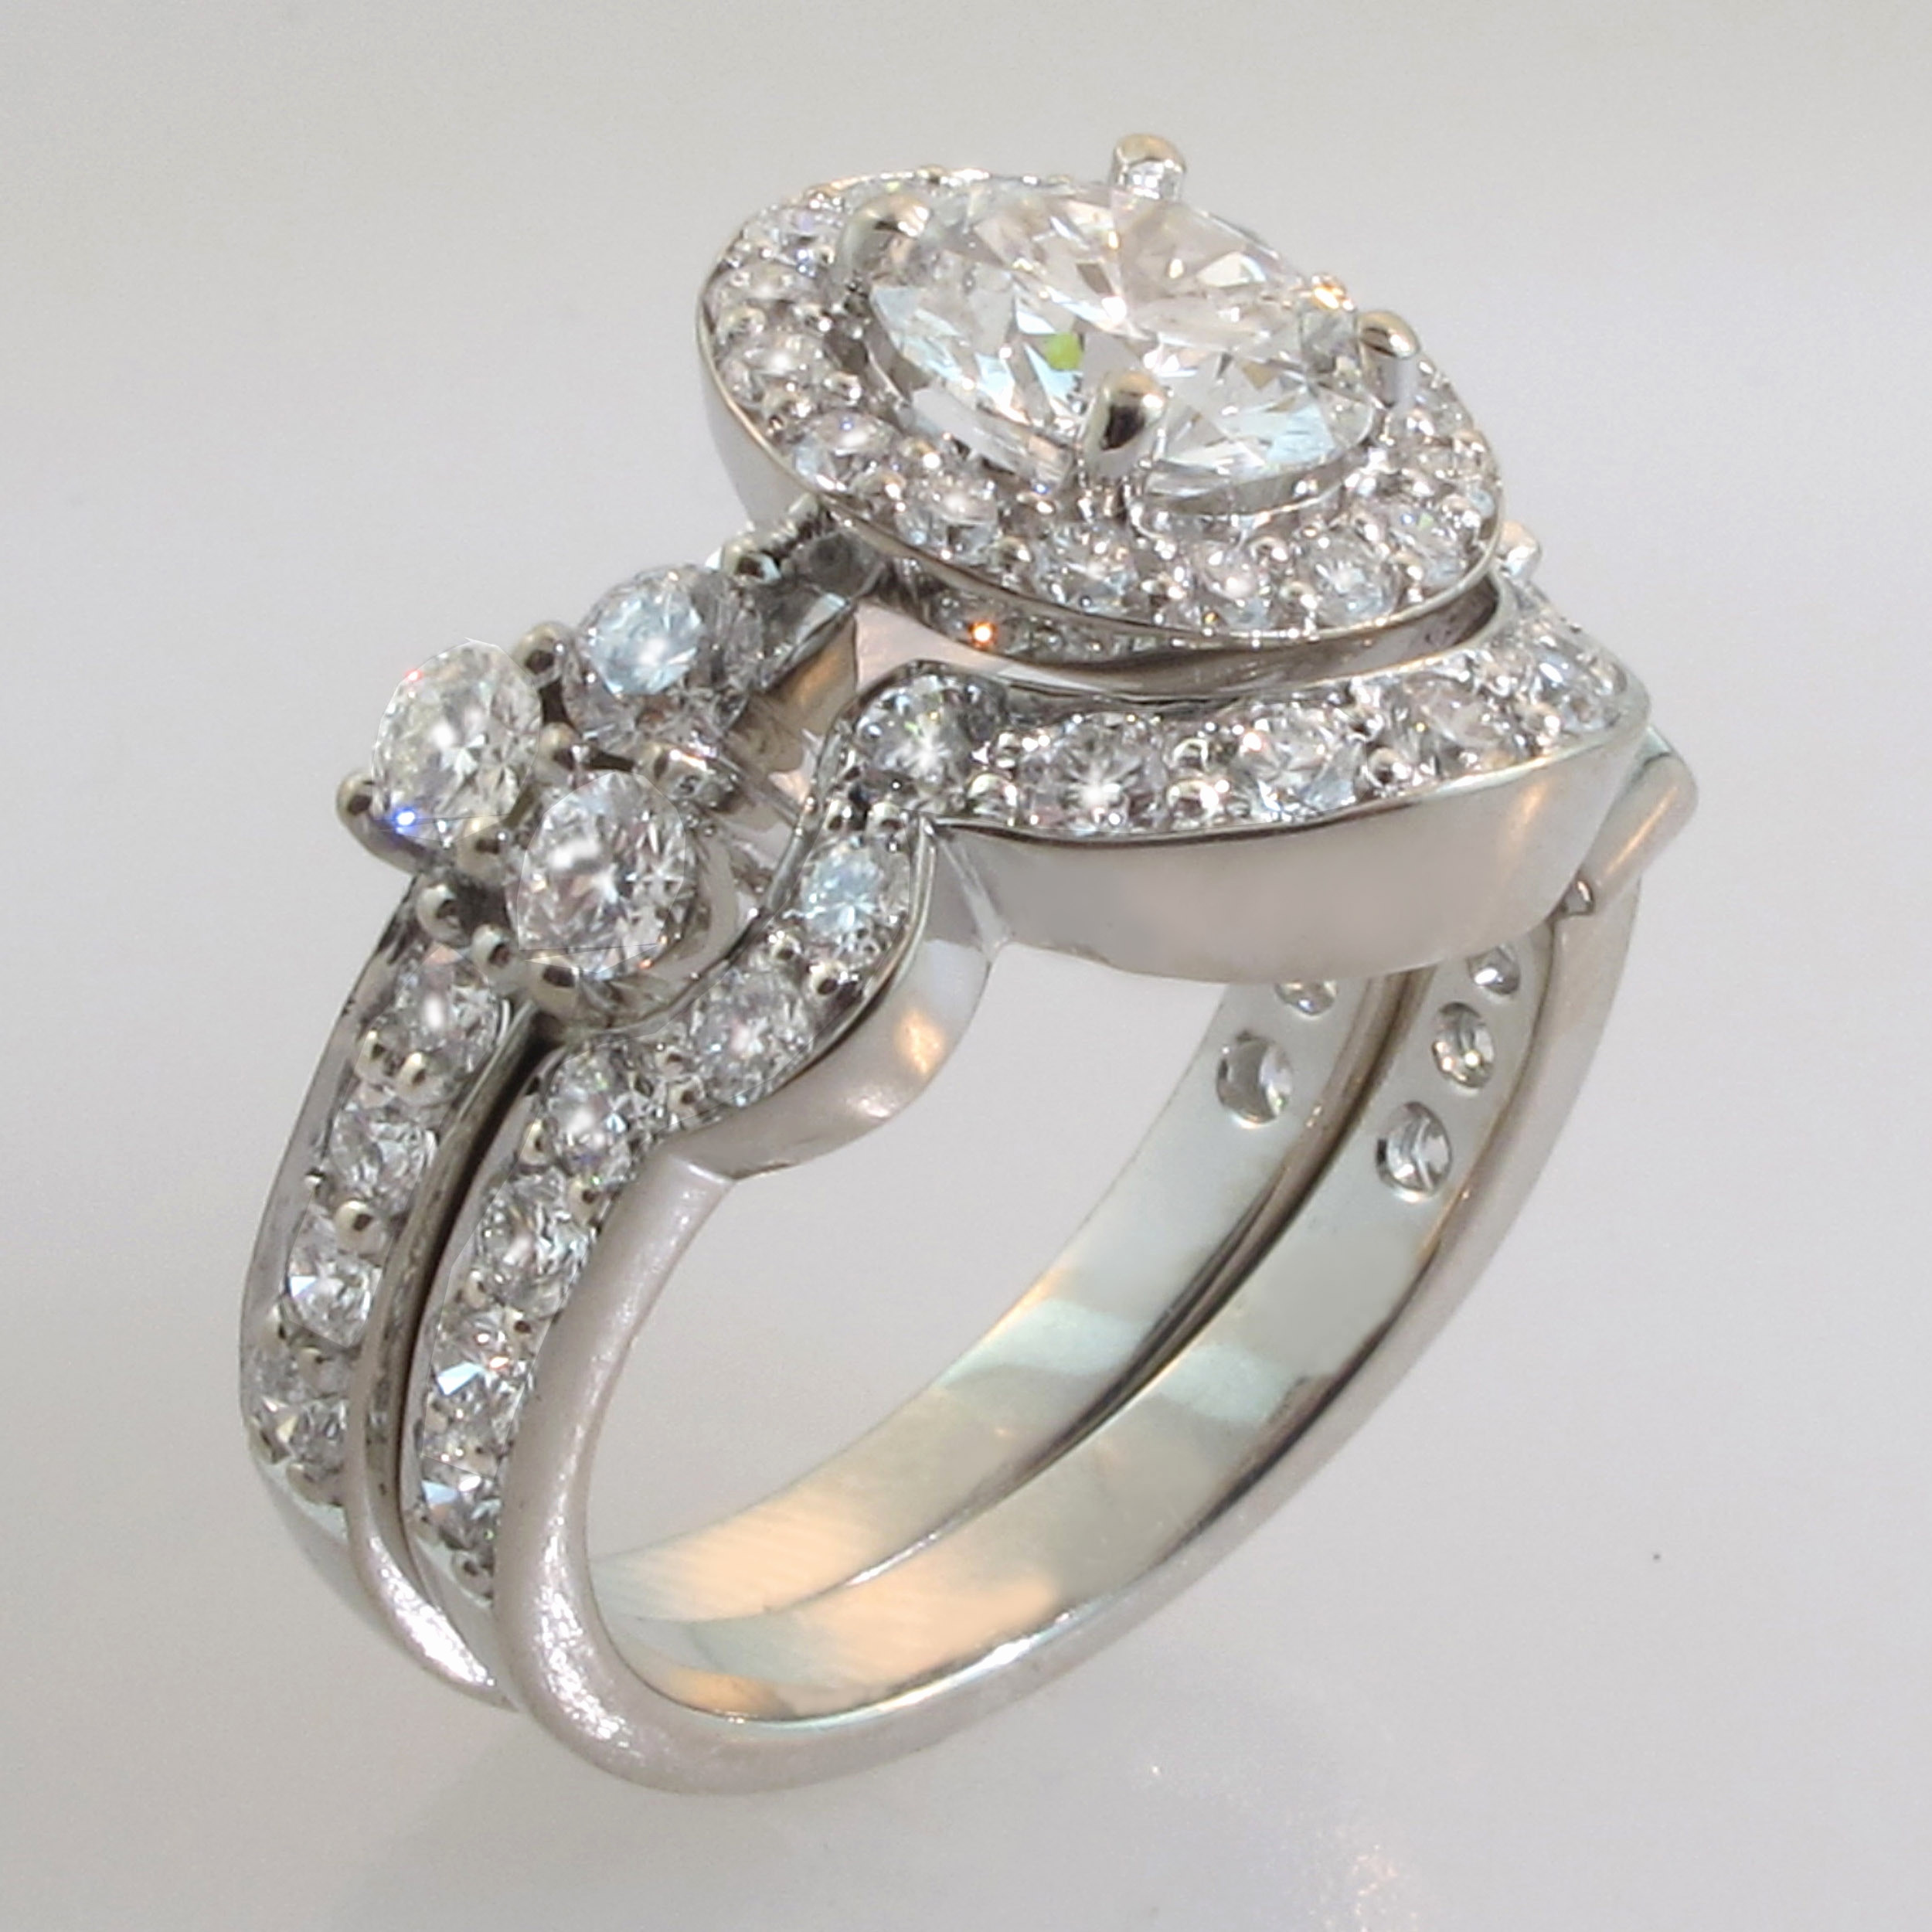 Kmart Wedding Rings
 Kmart Wedding Ring Sets New Kmart Jewelry Wedding Bands